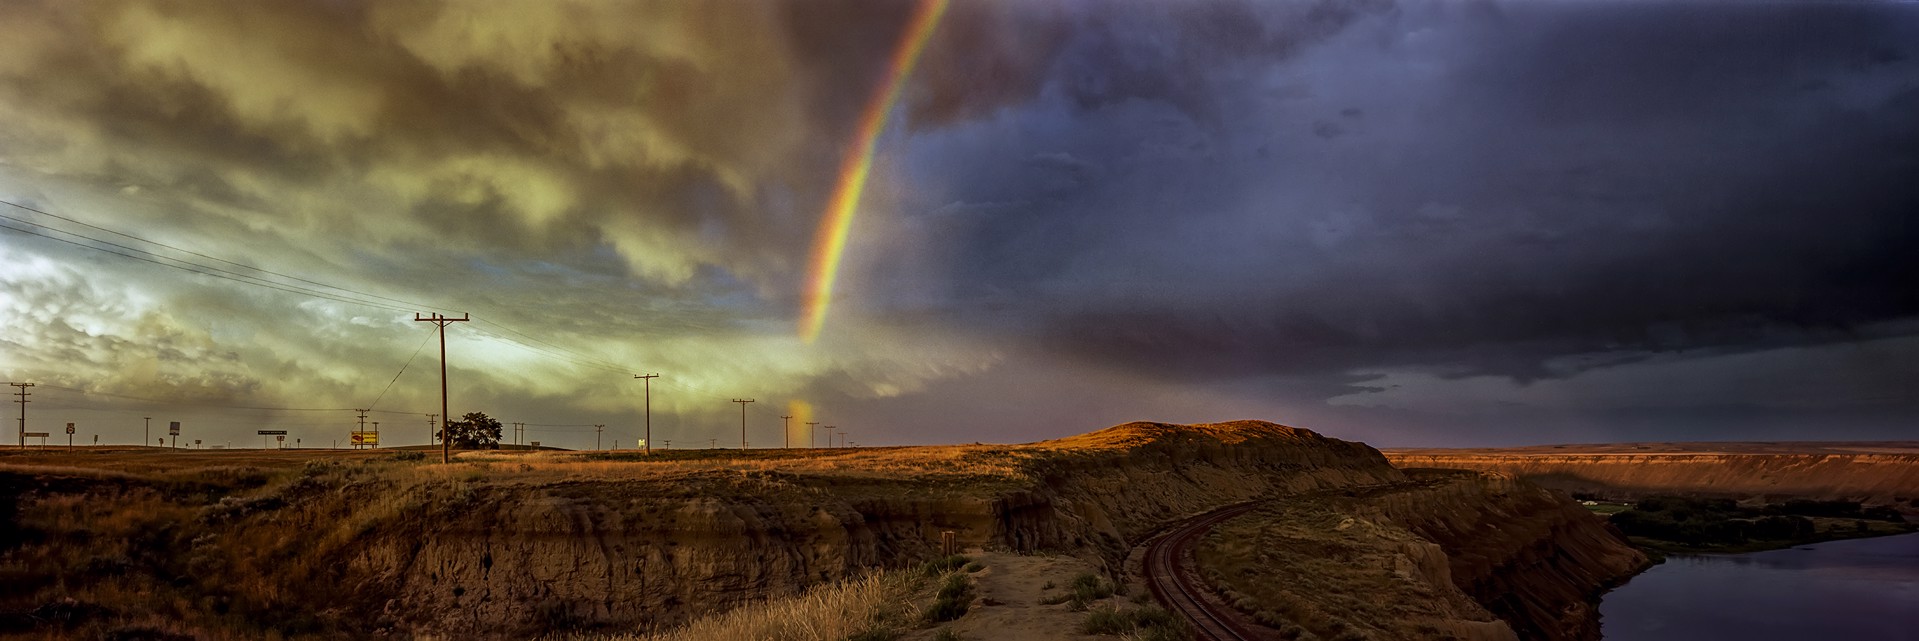 Thunderstorm & Rainbow, Missouri River Overlook, Near Fort Benton, Montana by Lawrence McFarland